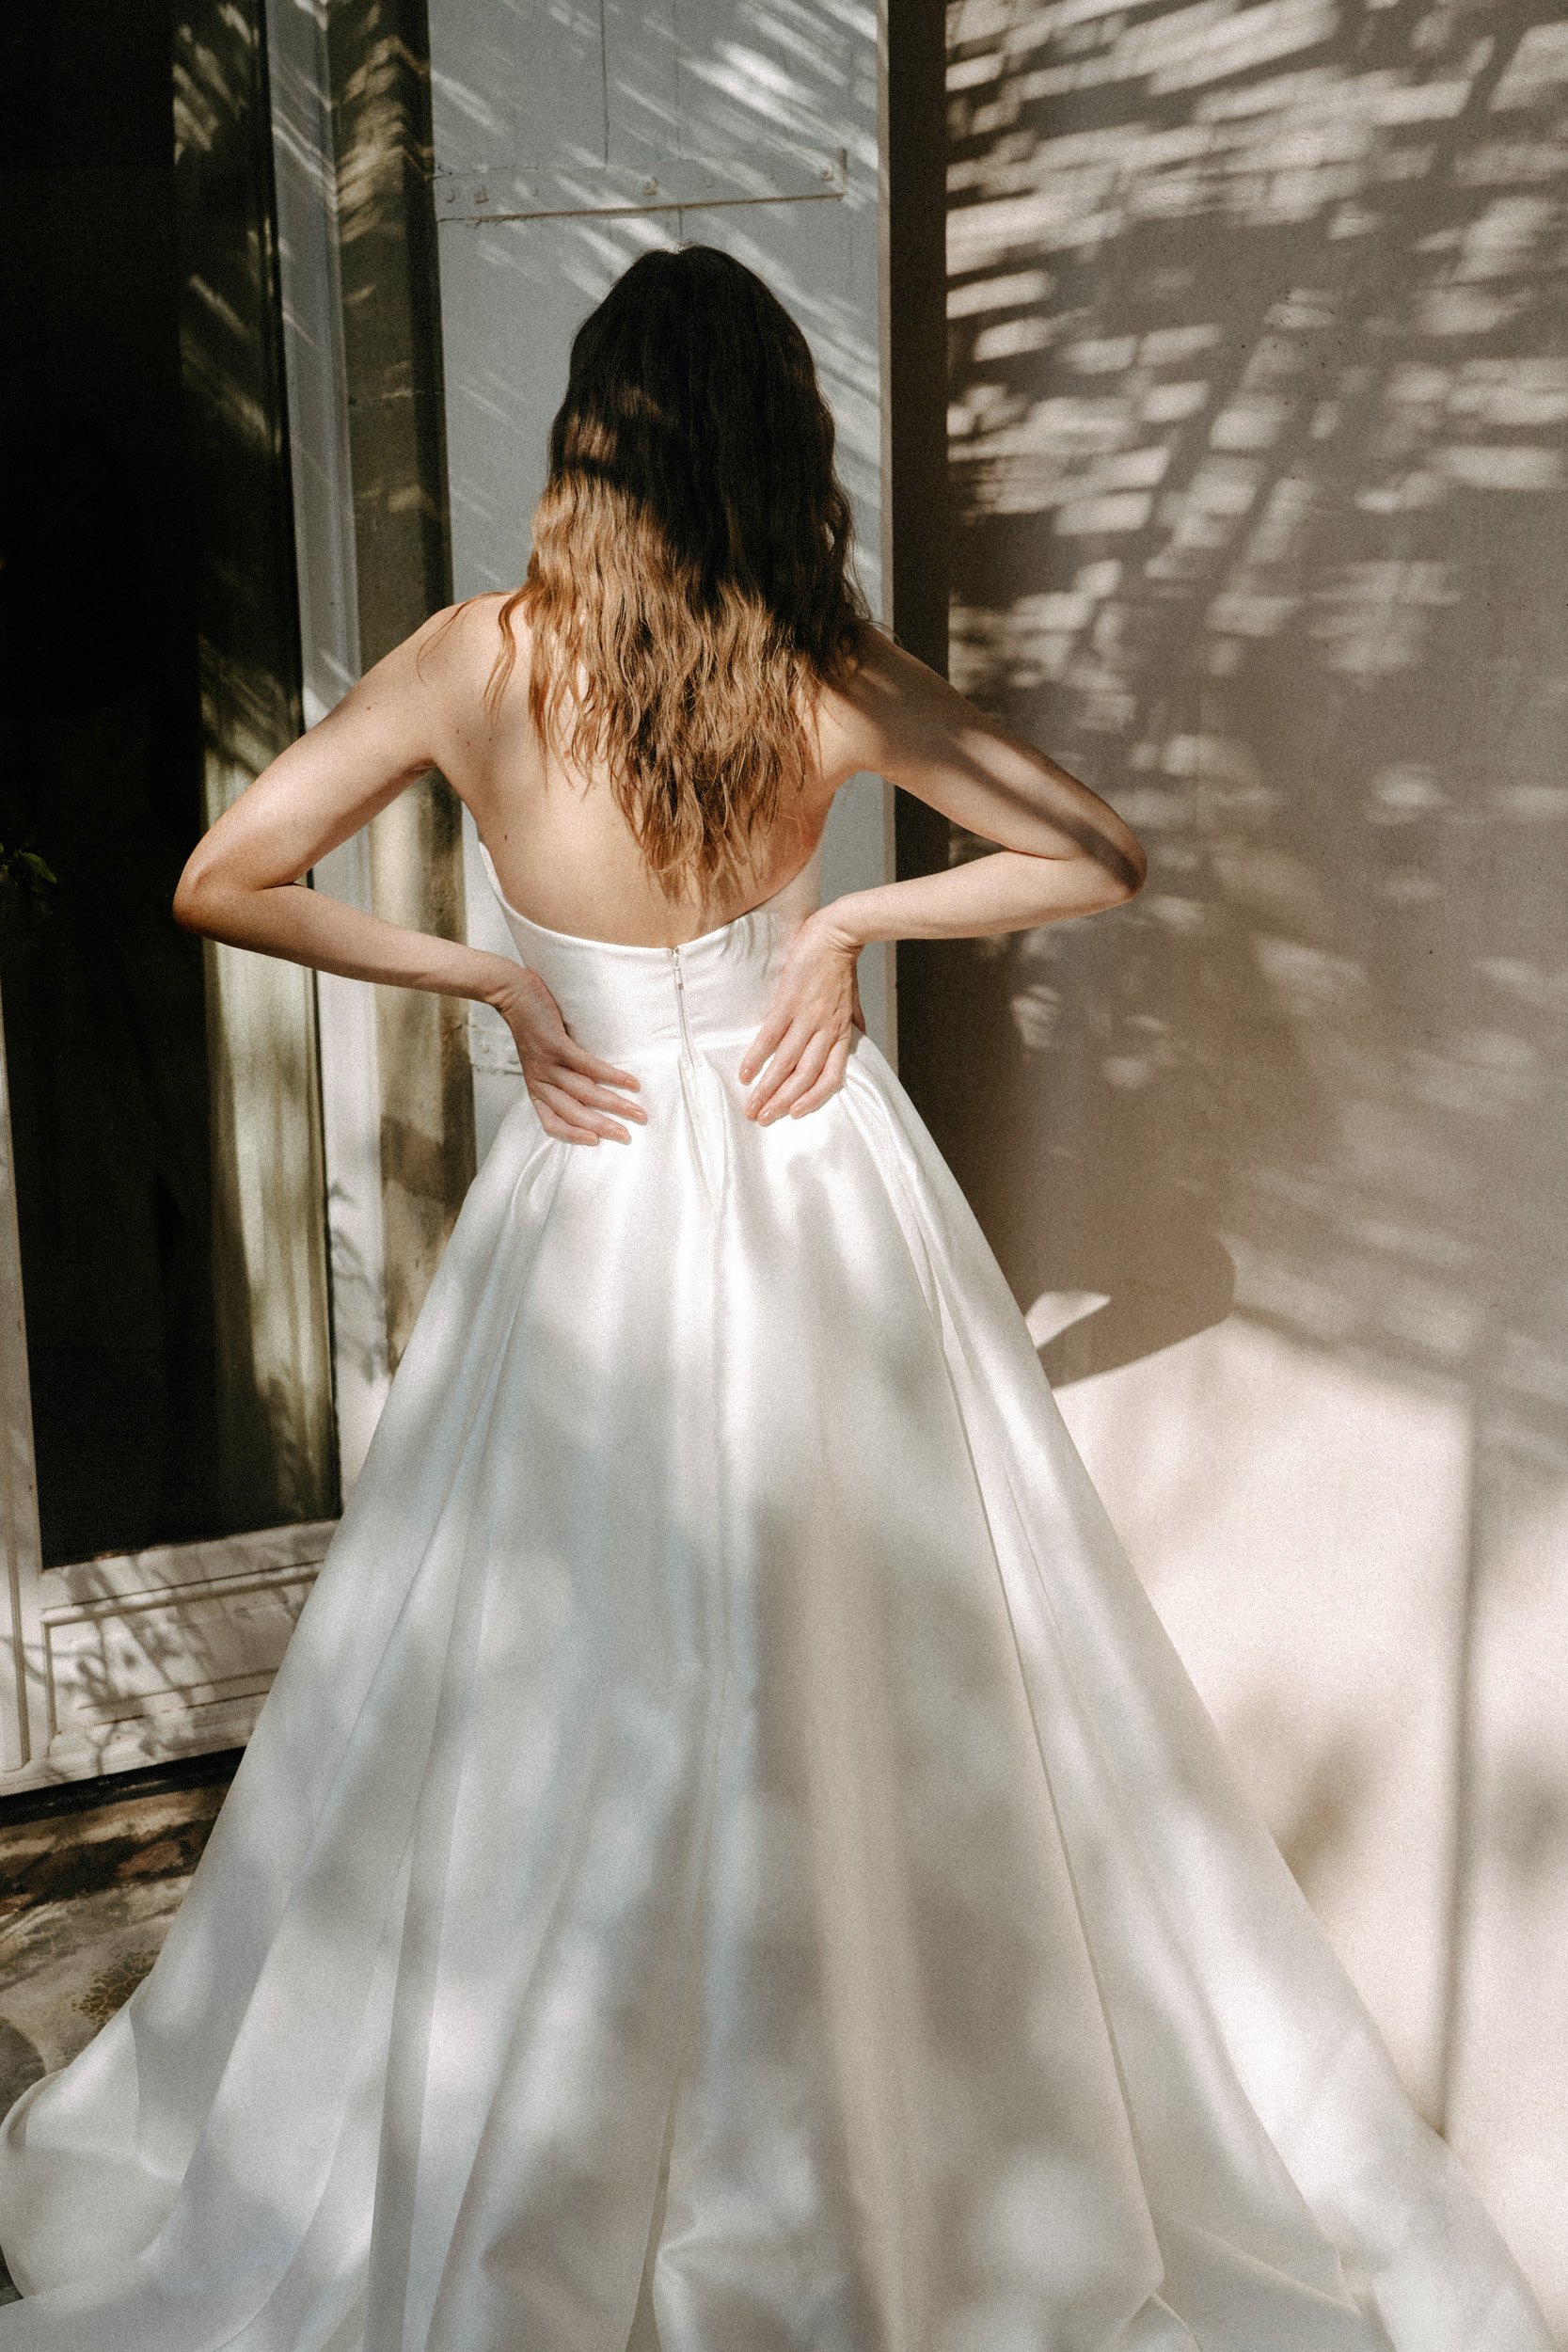 wisteria-alena-leena-wedding-dress-2.jpeg